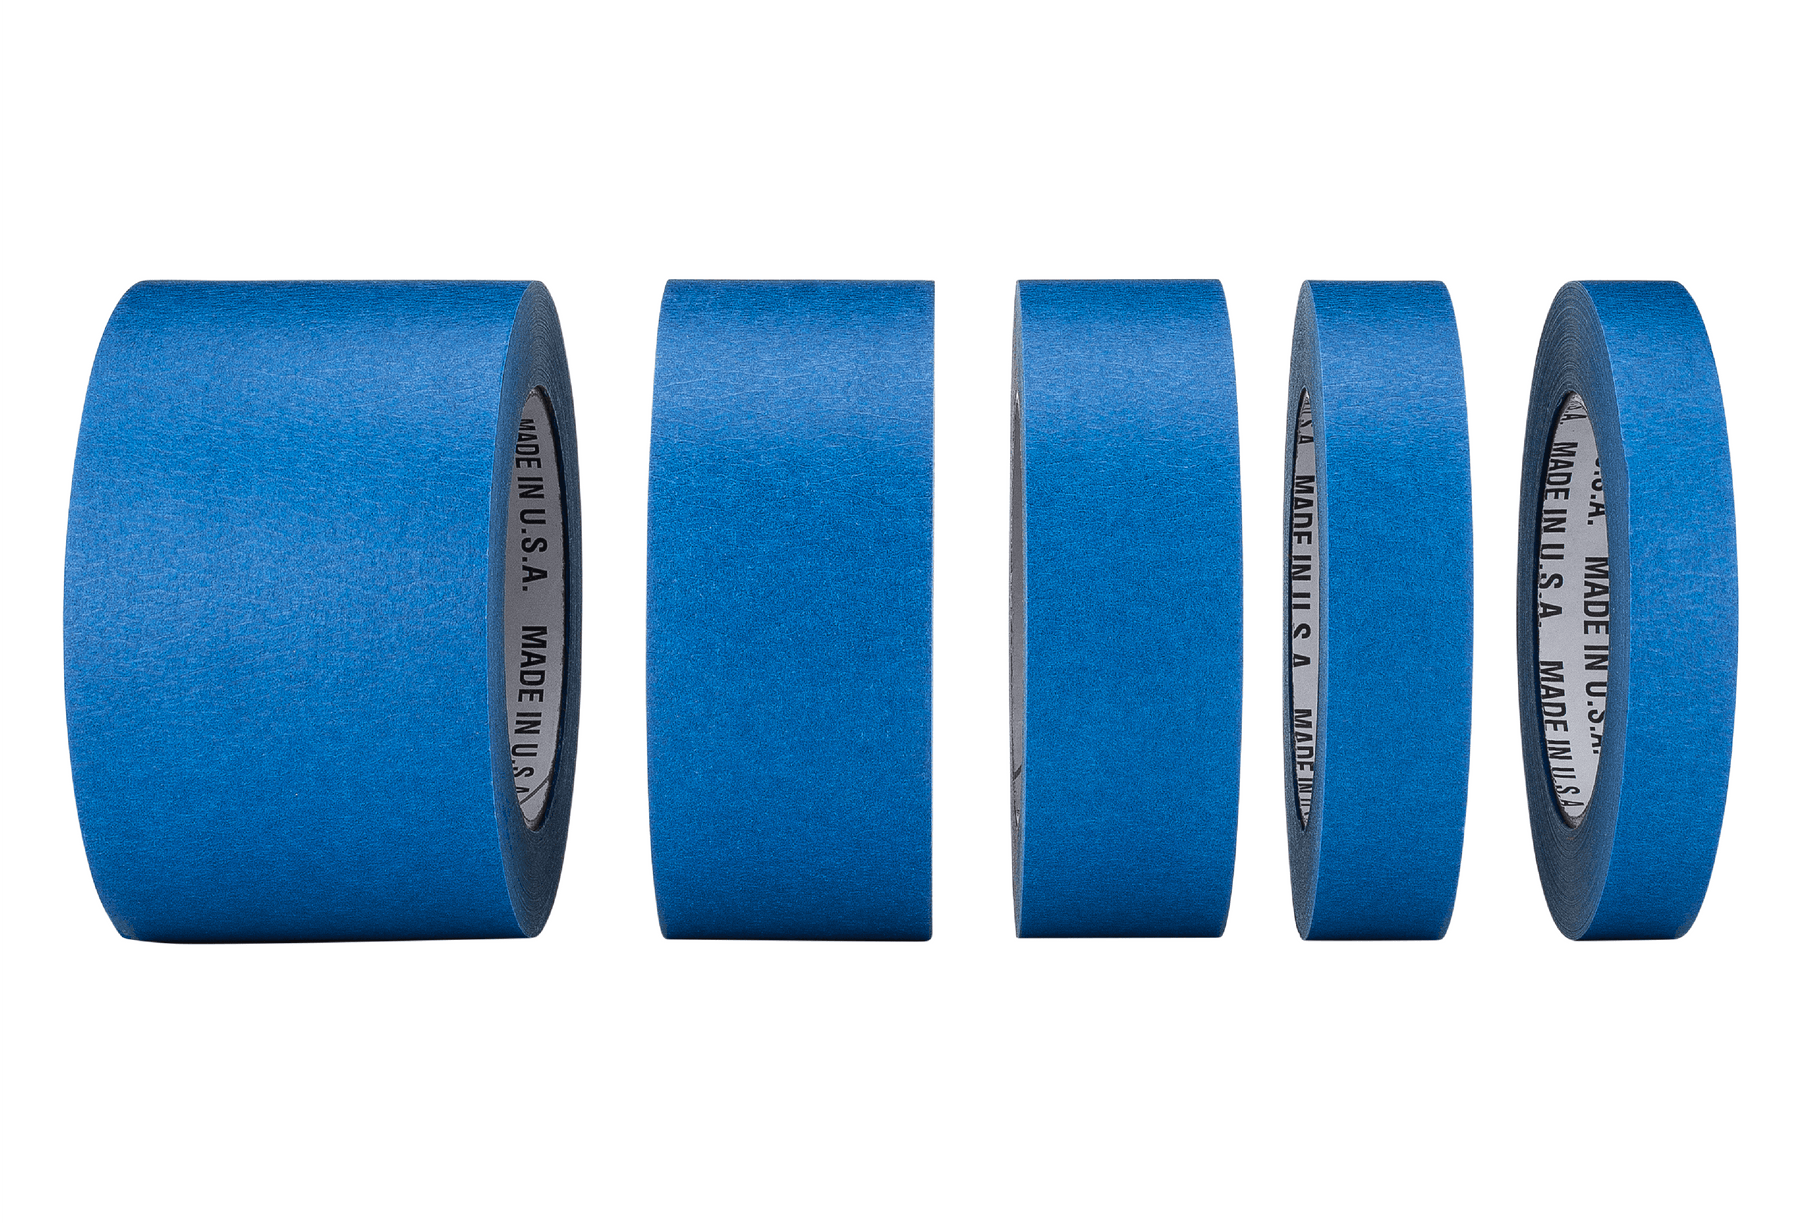 3M Scotch Blue Painters' Tape #2090 - 1 x 60 yards